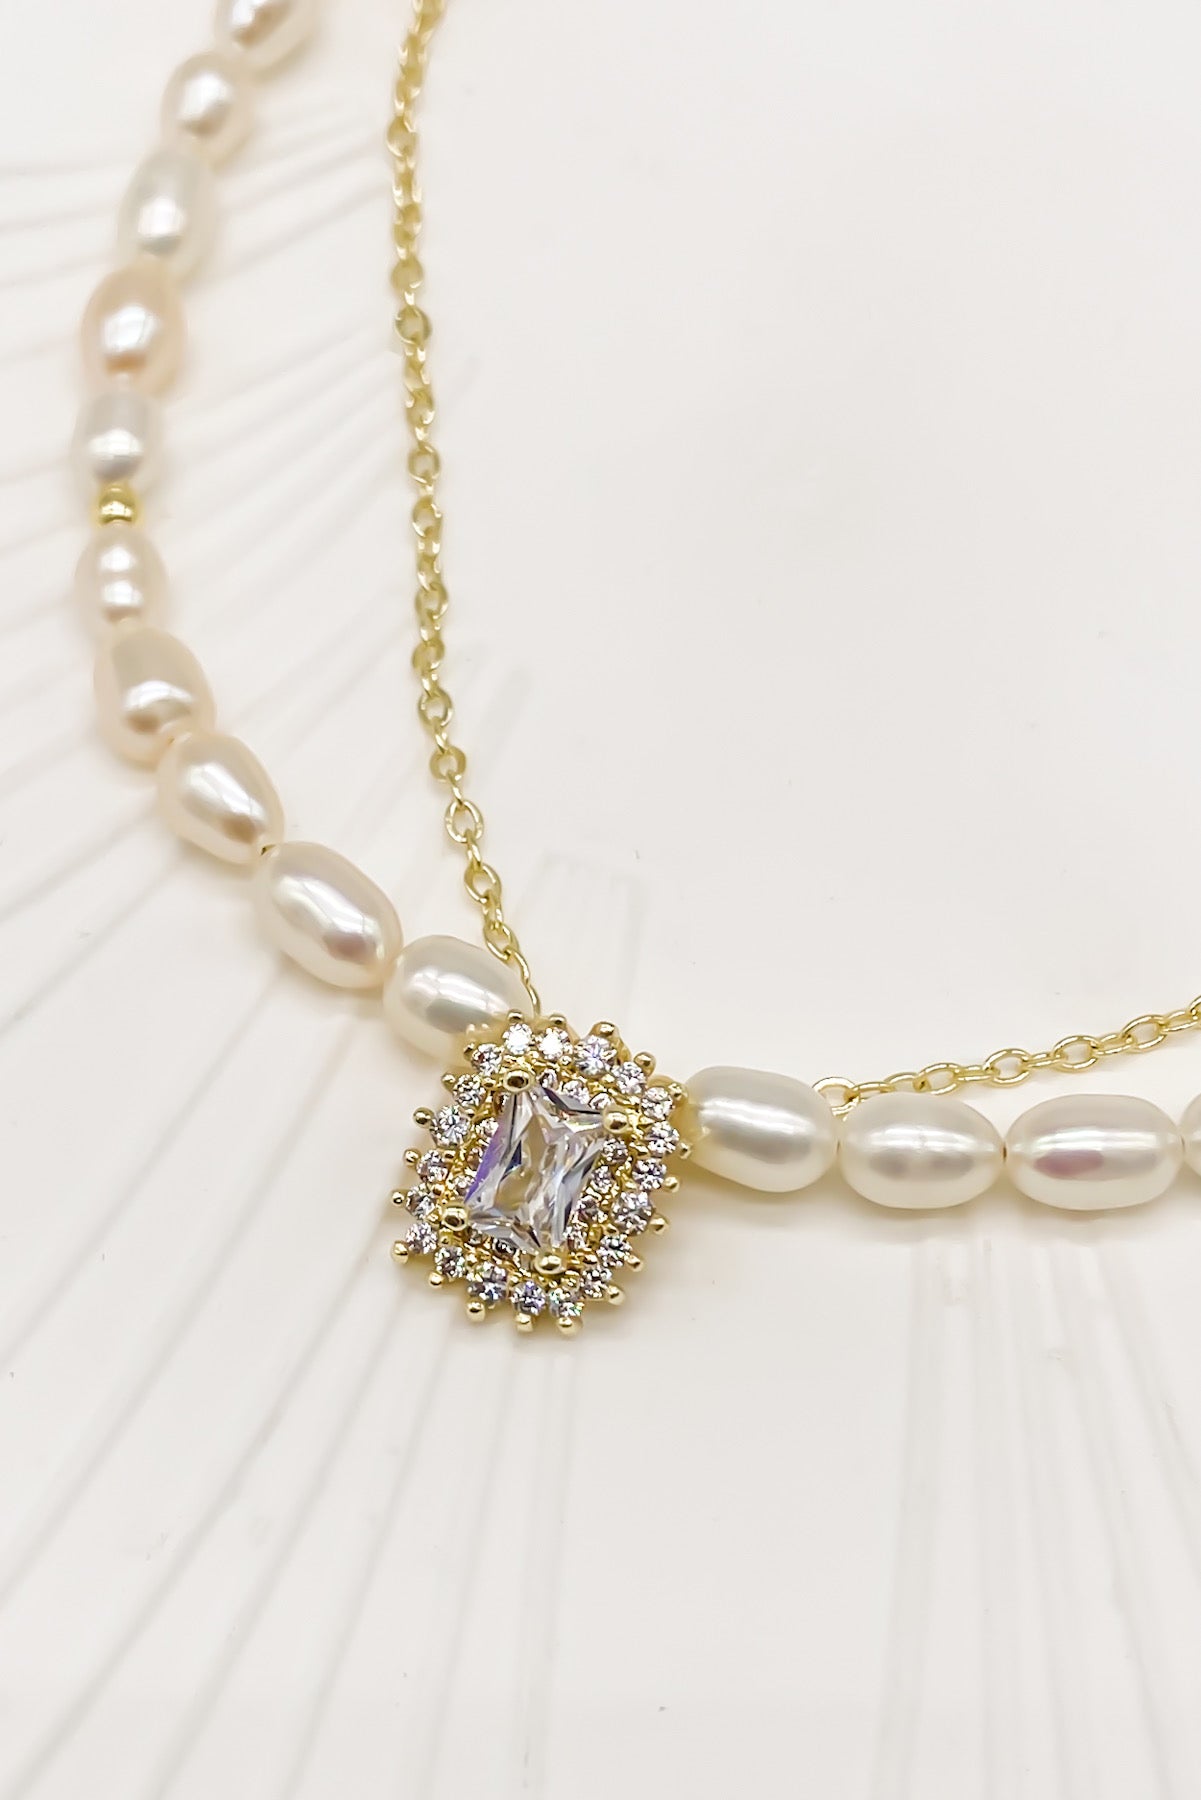 SKYE Shop Chic Modern Elegant Classy Women Jewelry French Parisian Minimalist Jolie Freshwater Pearl Crystal Pendant Necklace